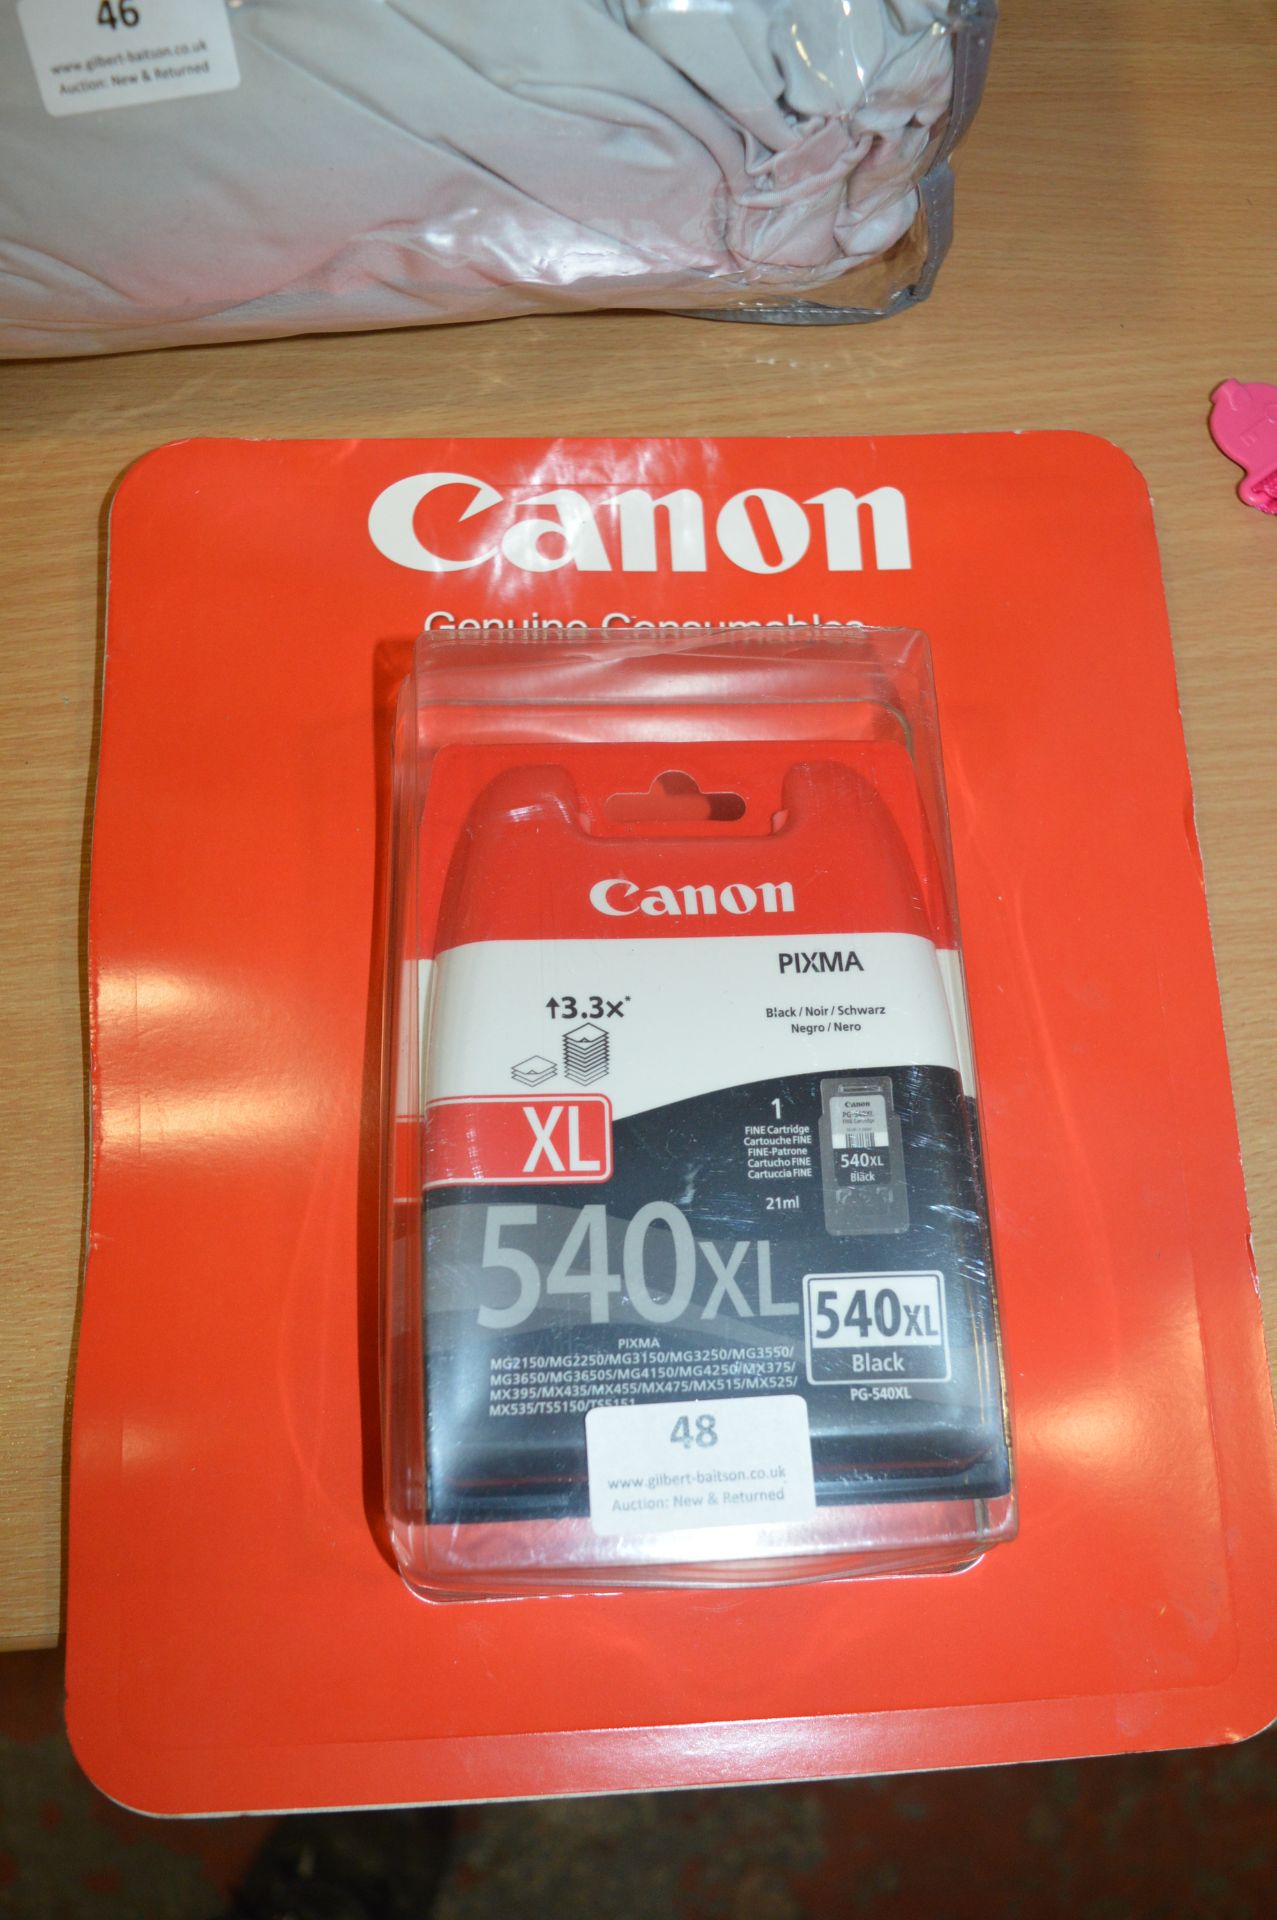 *Canon Pixma 540XL Black Printer Cartridge